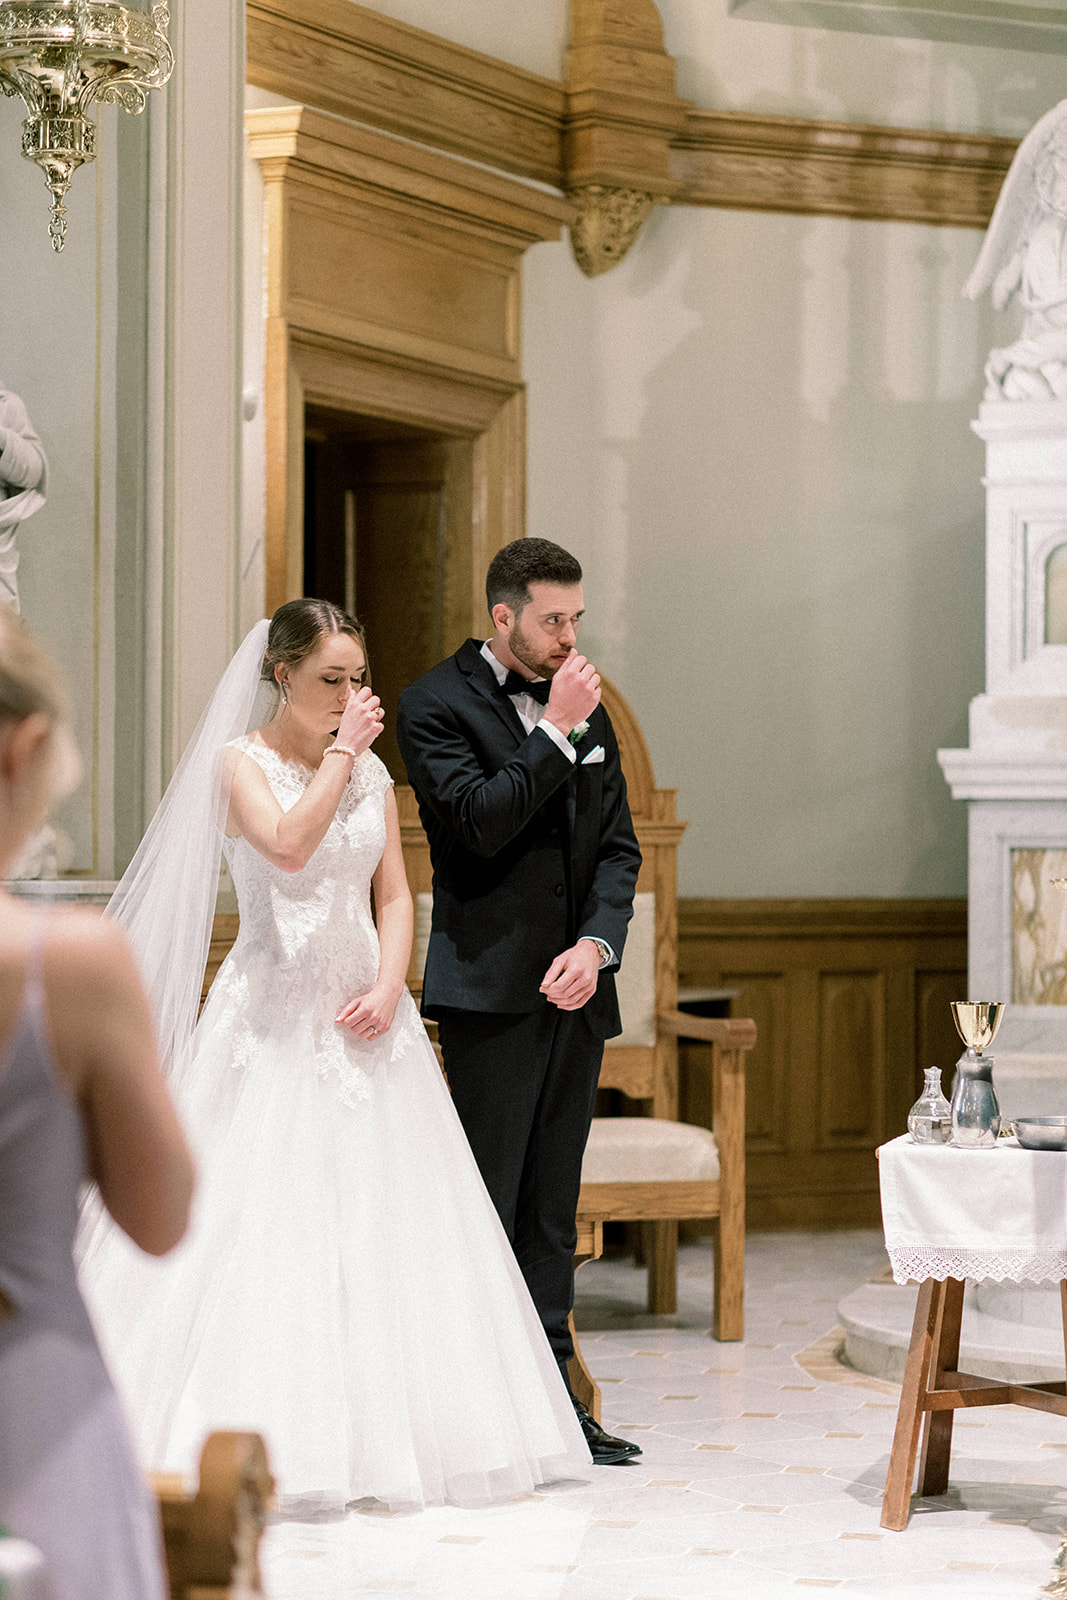 Pennsylvania wedding photographer captures bride and groom during wedding ceremony